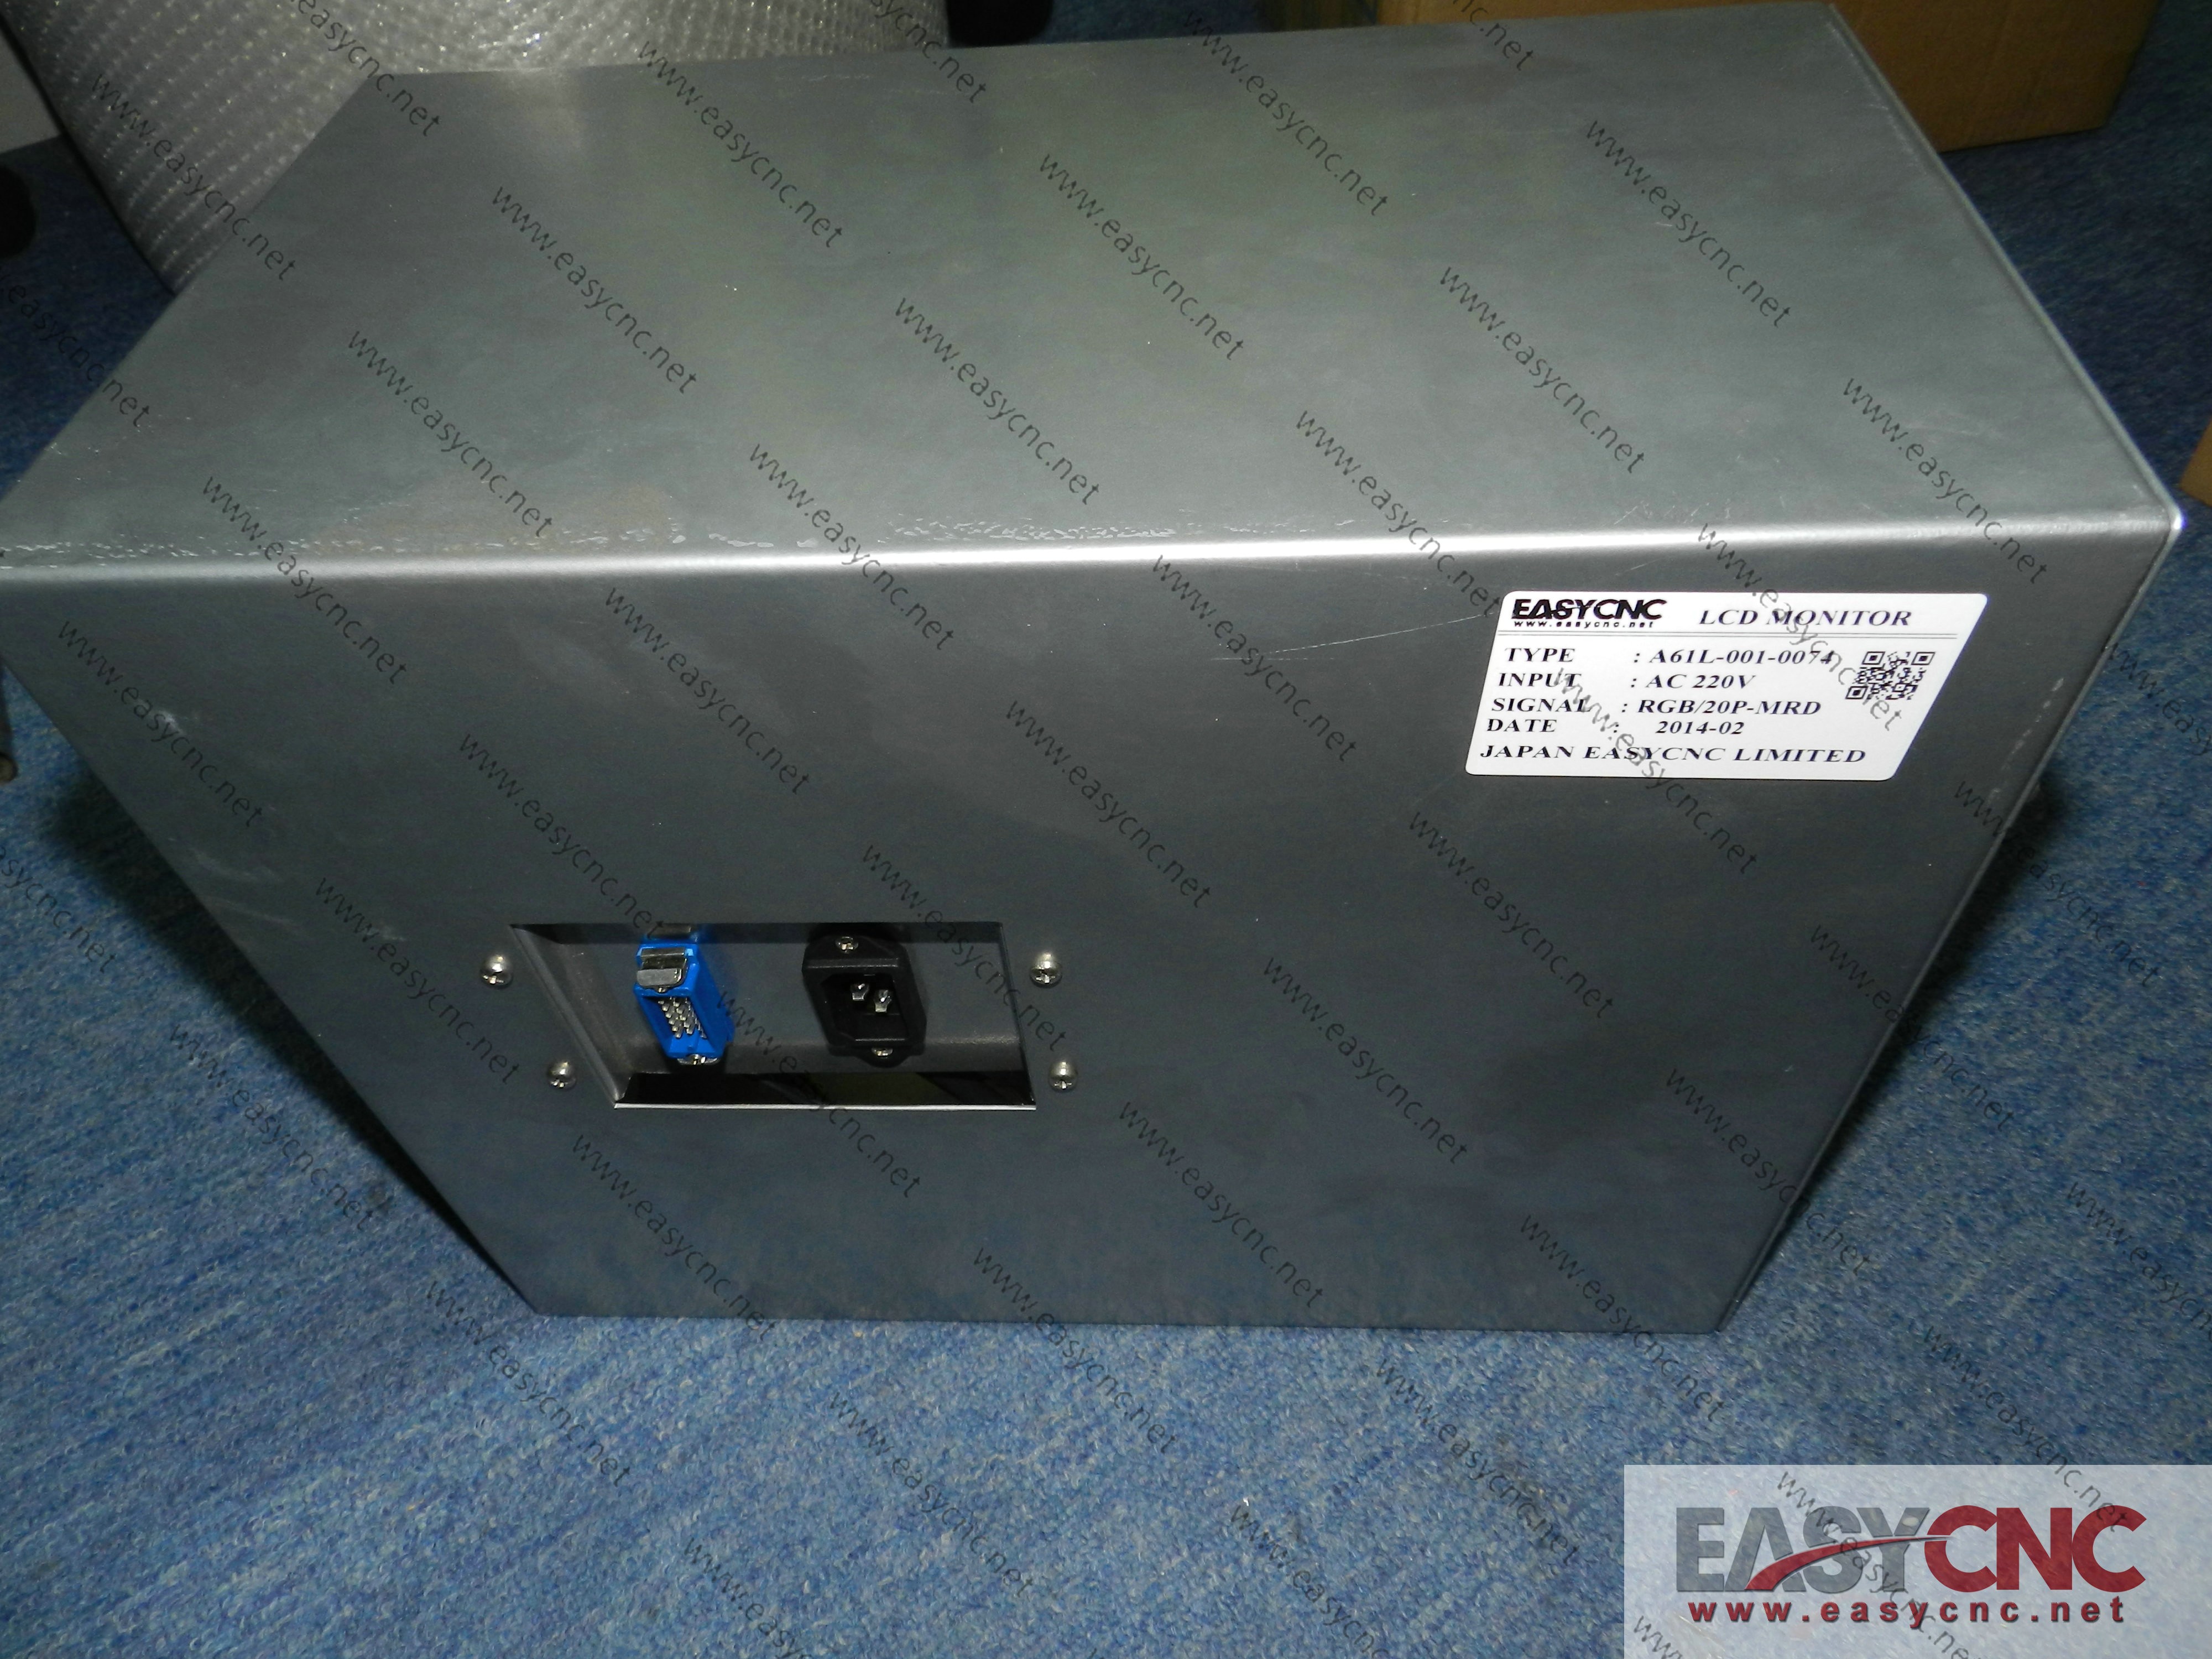 A61L-0001-0074 LCD Replace FANUC CRT  MONITOR 